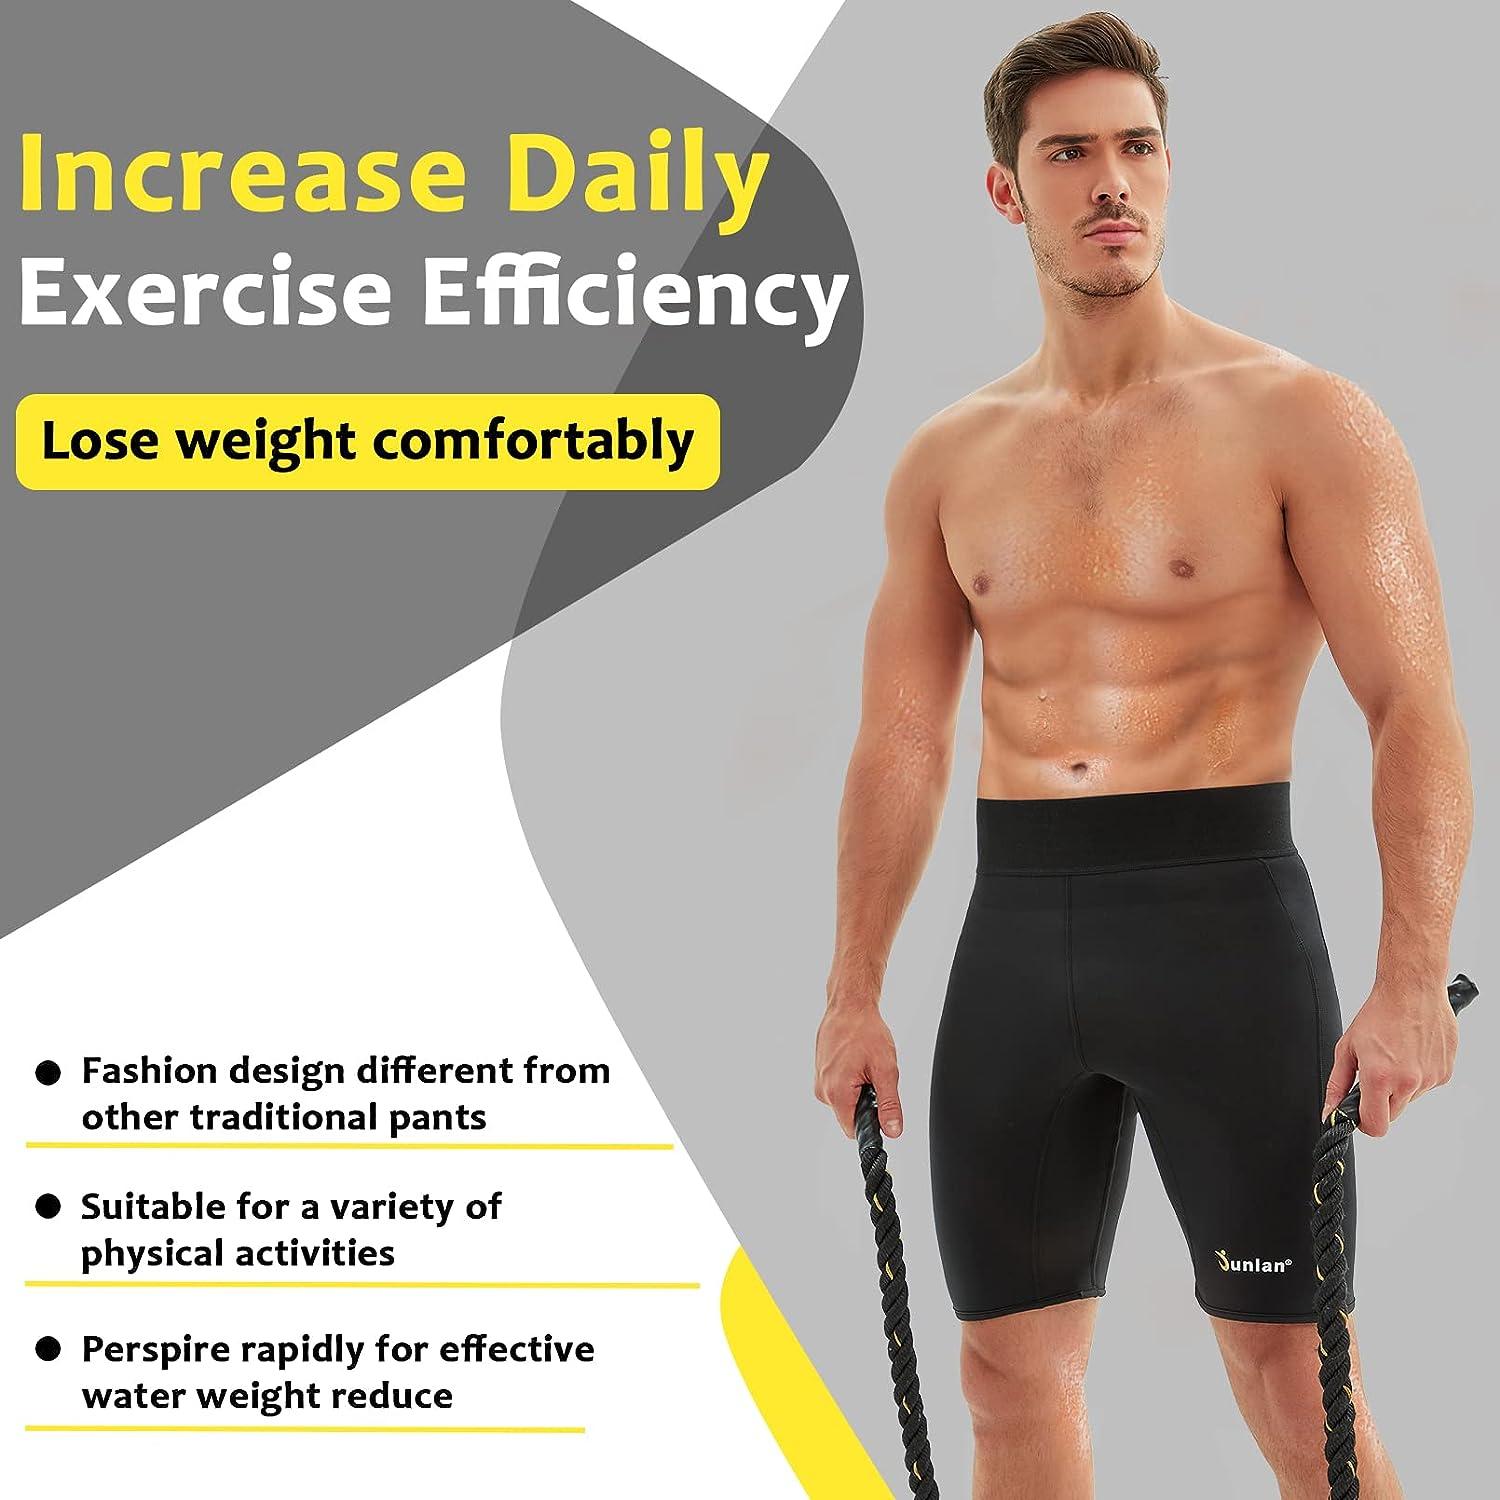  Junlan Men's Neoprene Weight Loss Sauna Shirt Suit Long Sleeve  Hot Sweat Body Shaper Tummy Fat Burner Slimming Workout Gym Yoga (Black, S)  : Sports & Outdoors